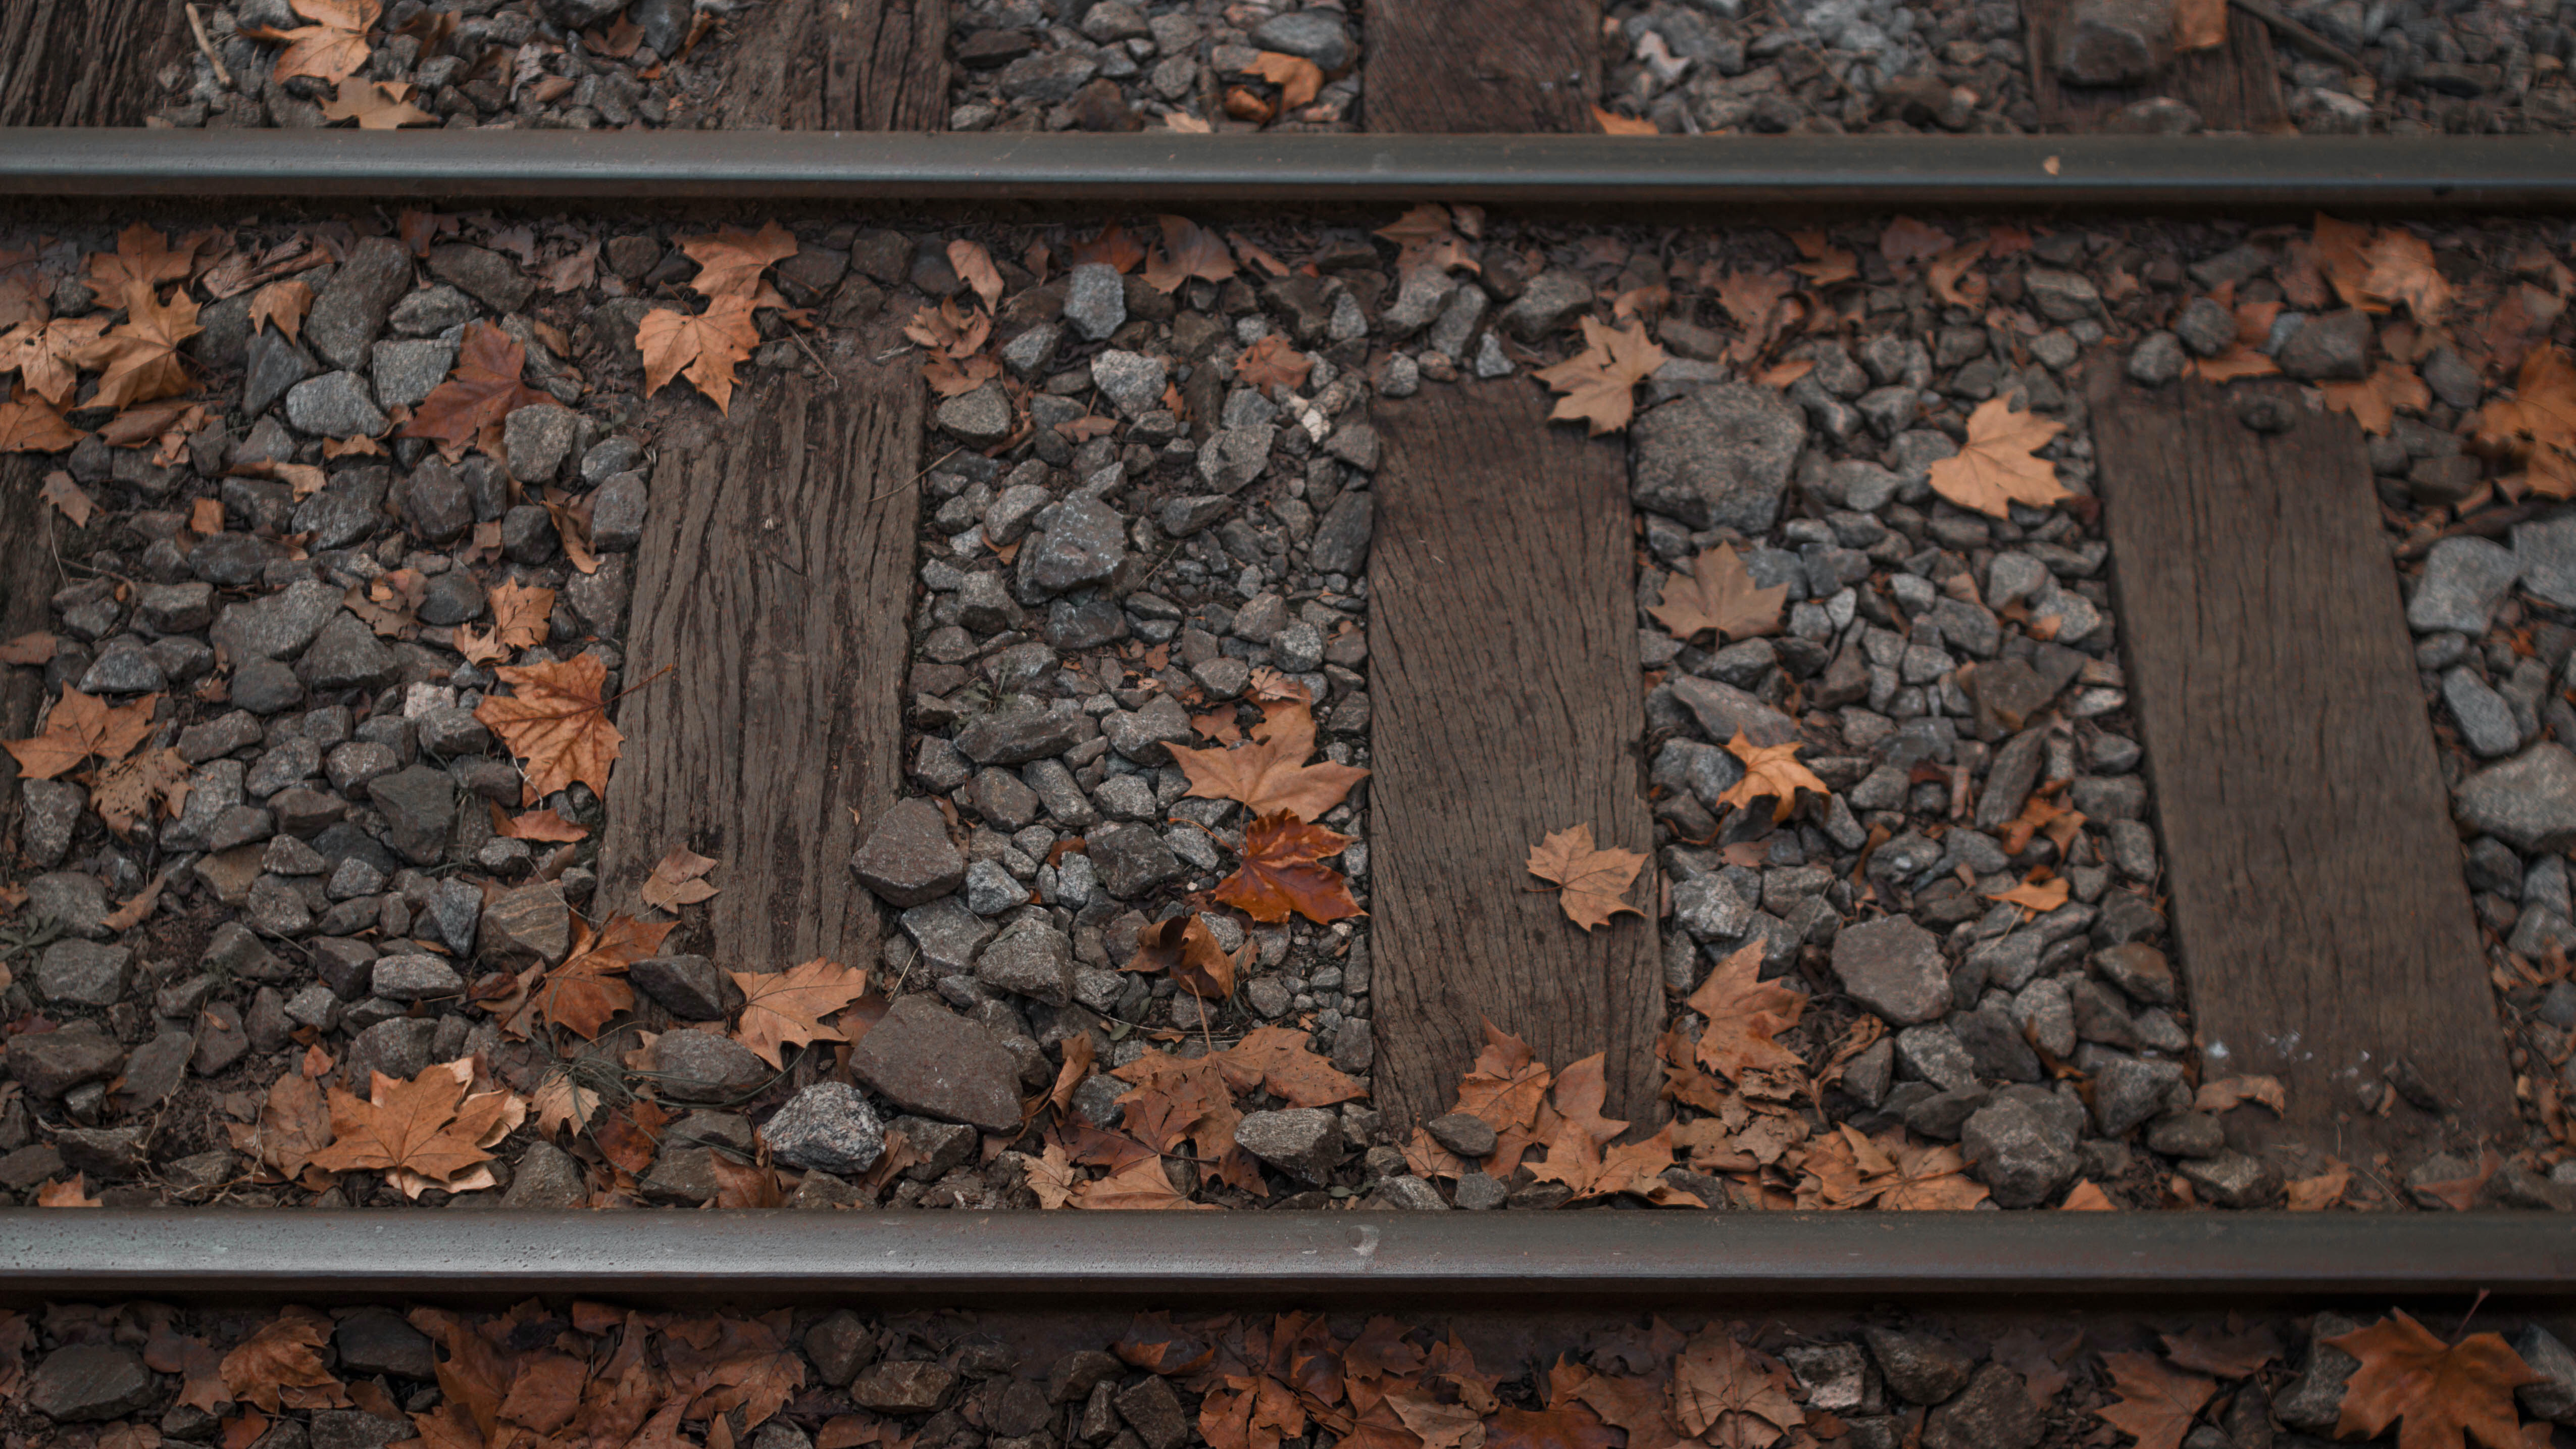 Railway Foliage Fall Leaves Wood Planks Pebbles Rocks Felipe Pelaquim Railroad Track Fallen Leaves 5101x2869